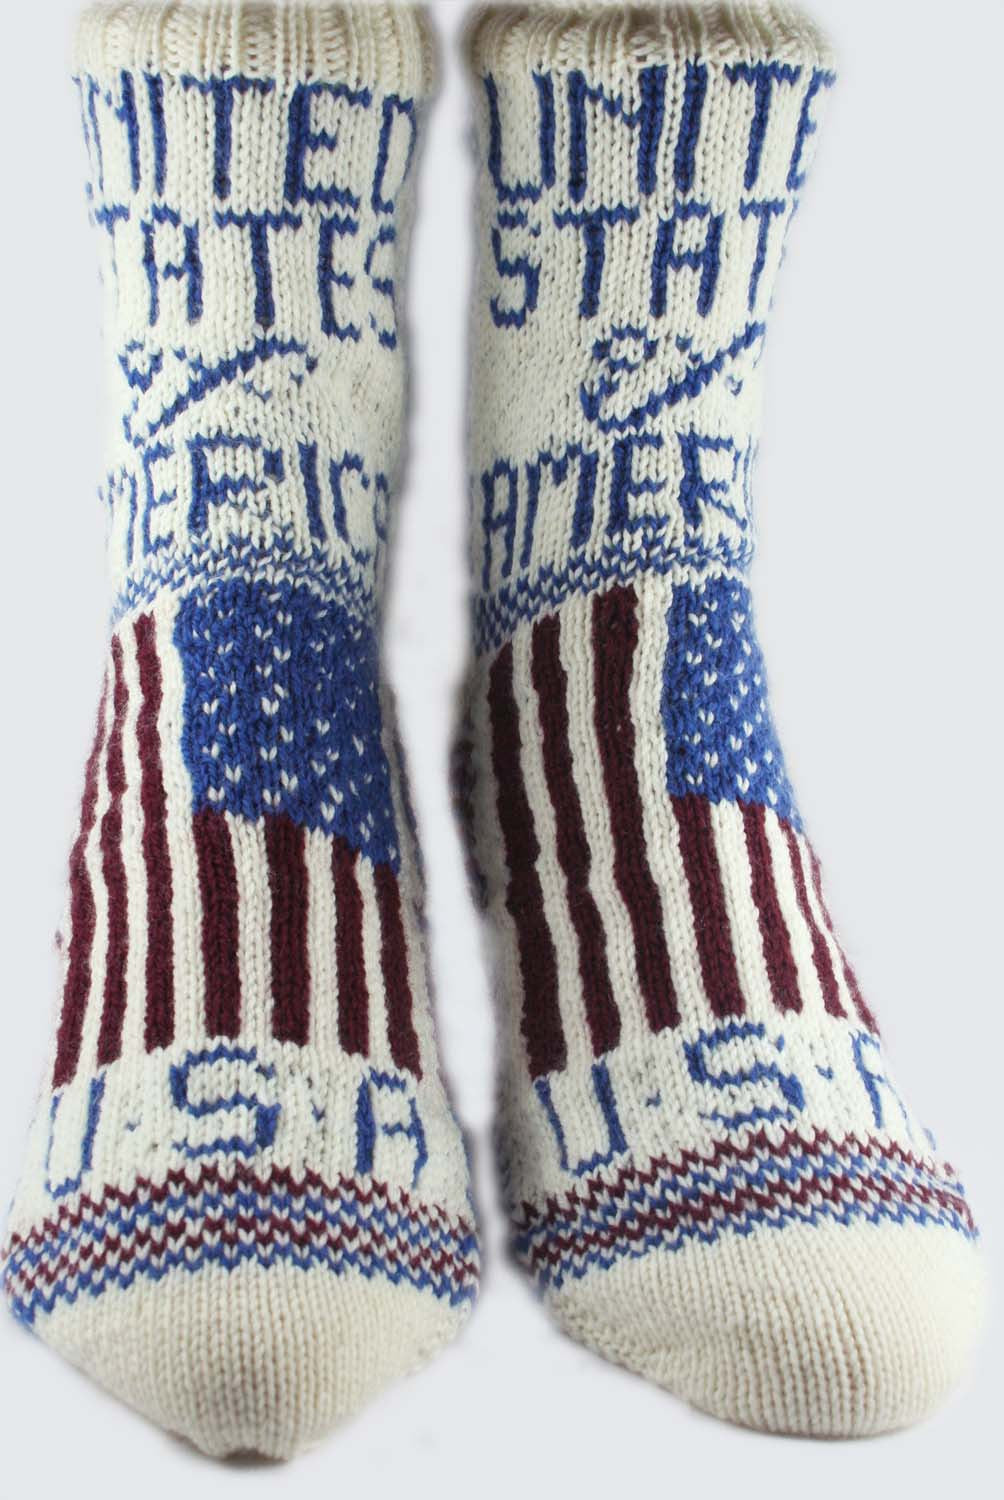 KNITTING PATTERN for Flag Socks: USA -  Charted Colorwork Sock pattern - digital download